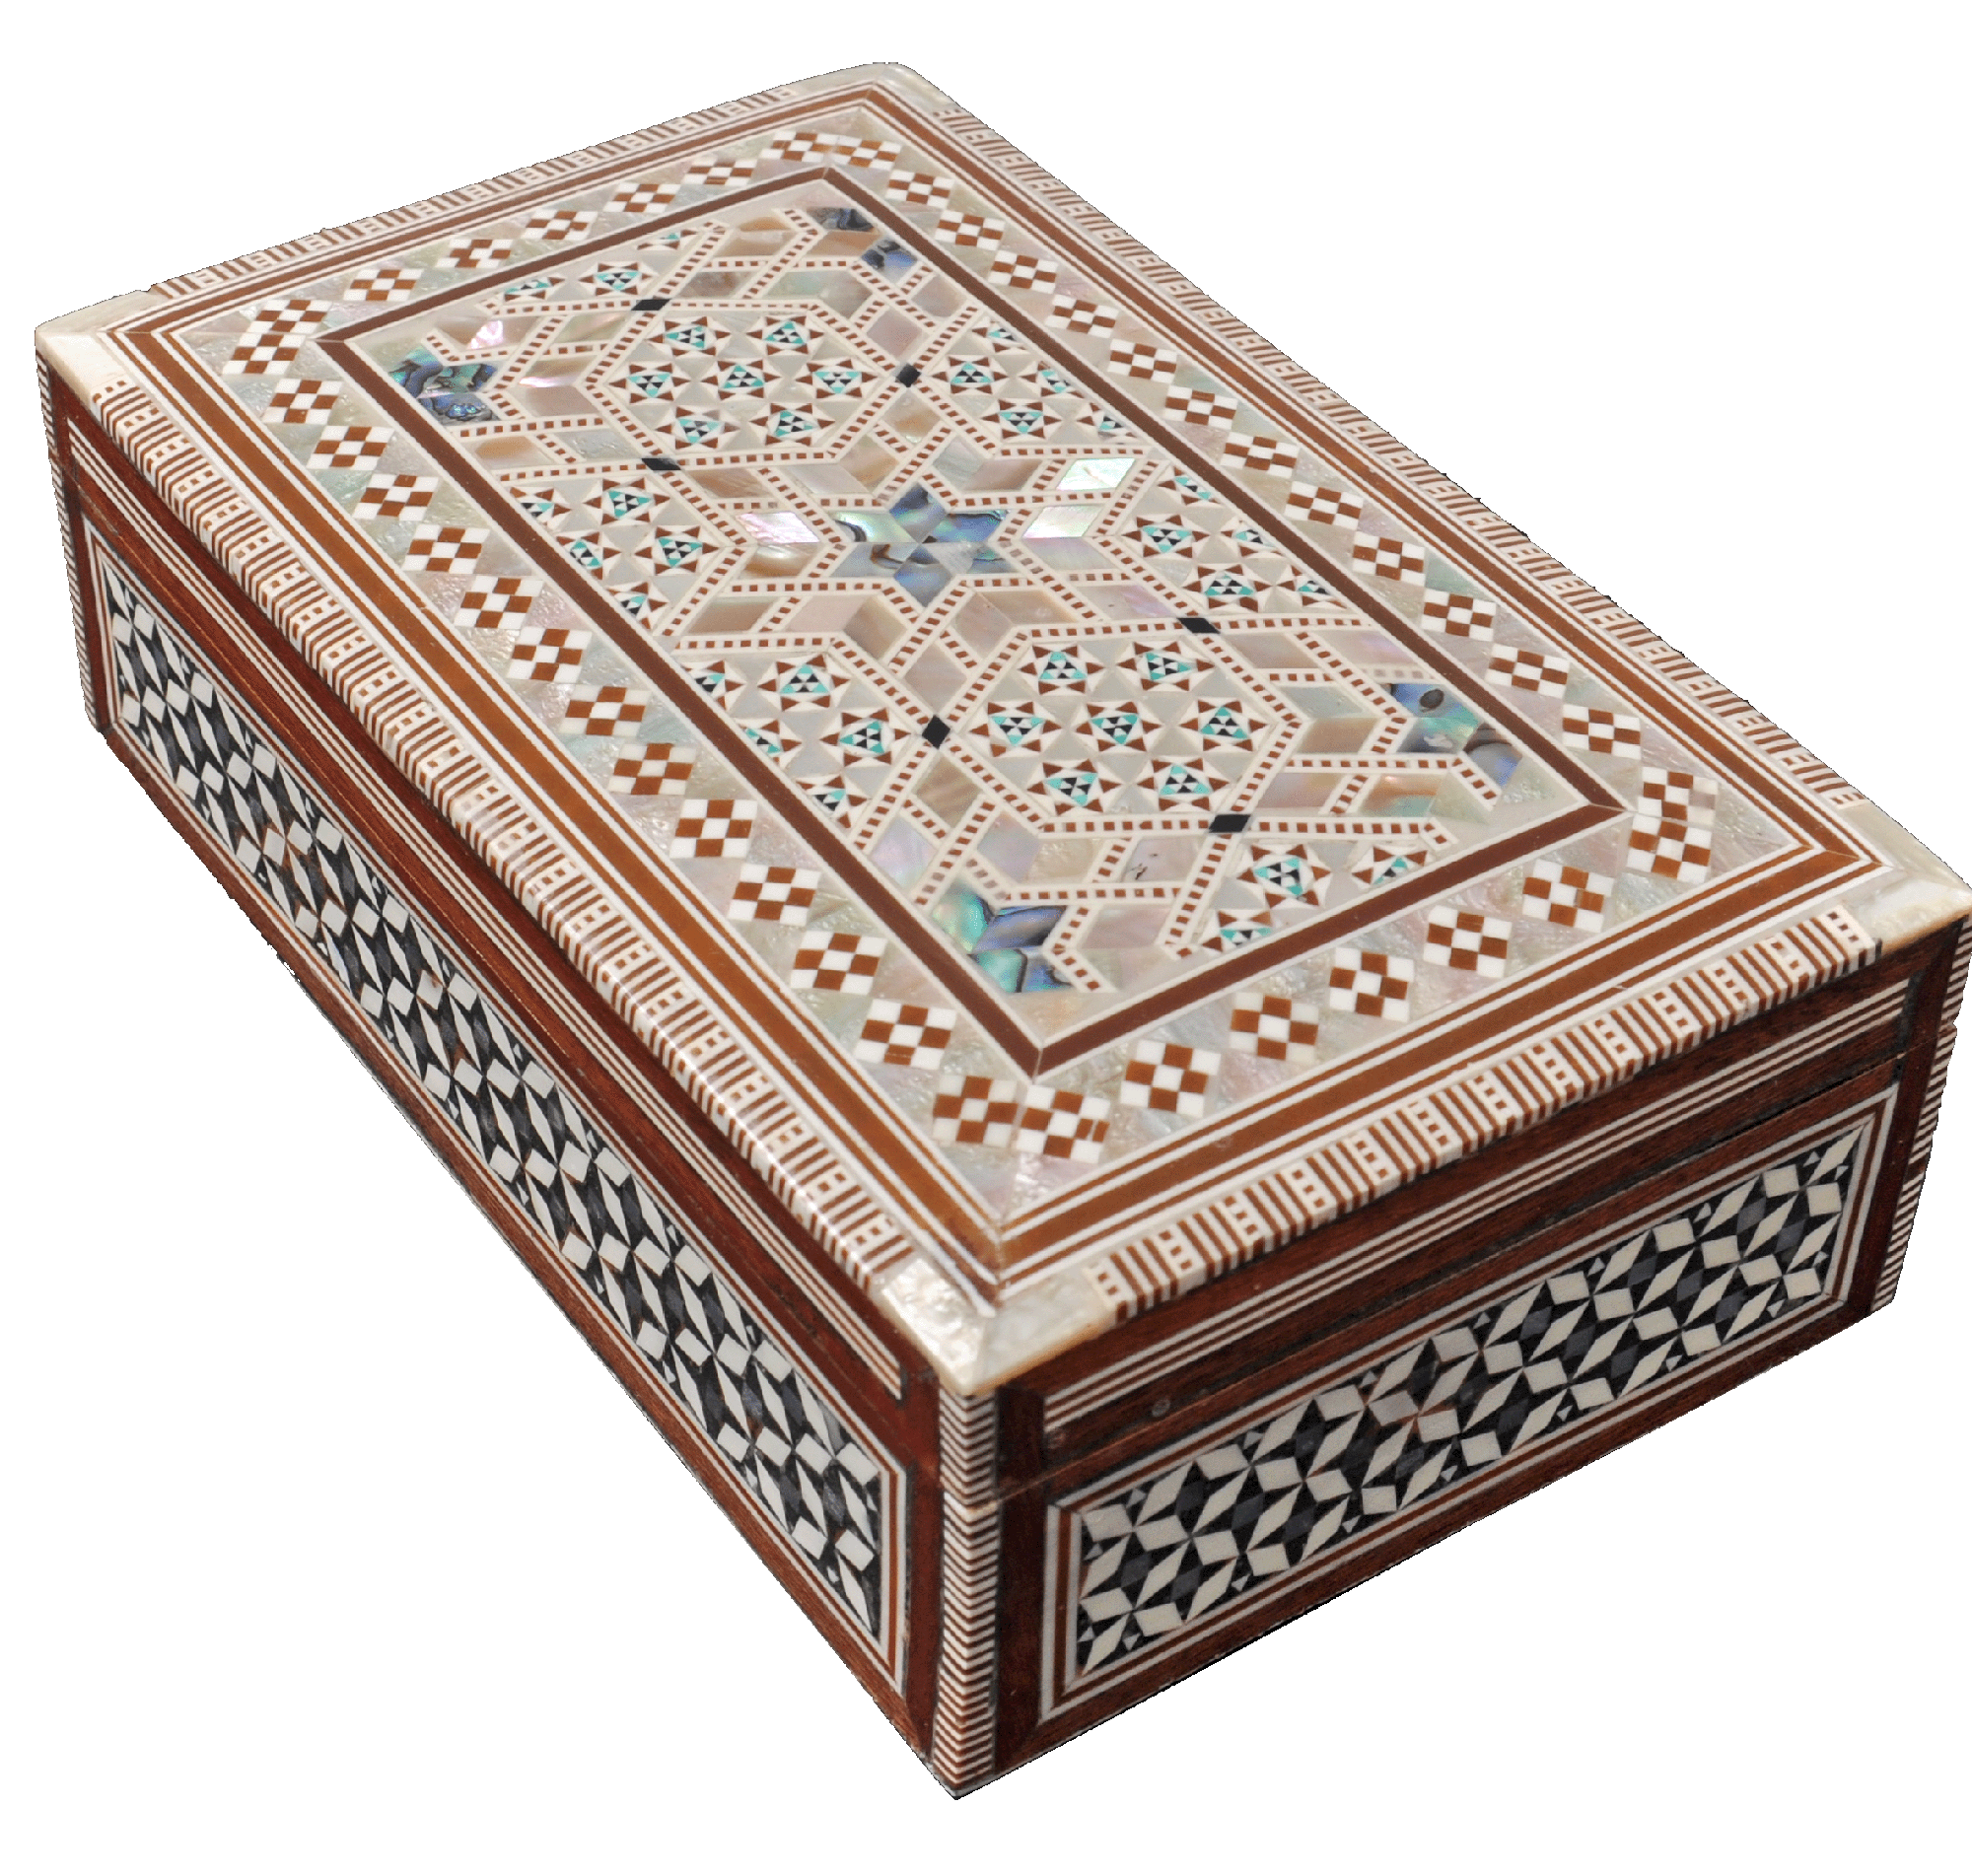 Egyptian Mother of Pearl Inlaid Paua Hexagonal Jewelry Box #138 